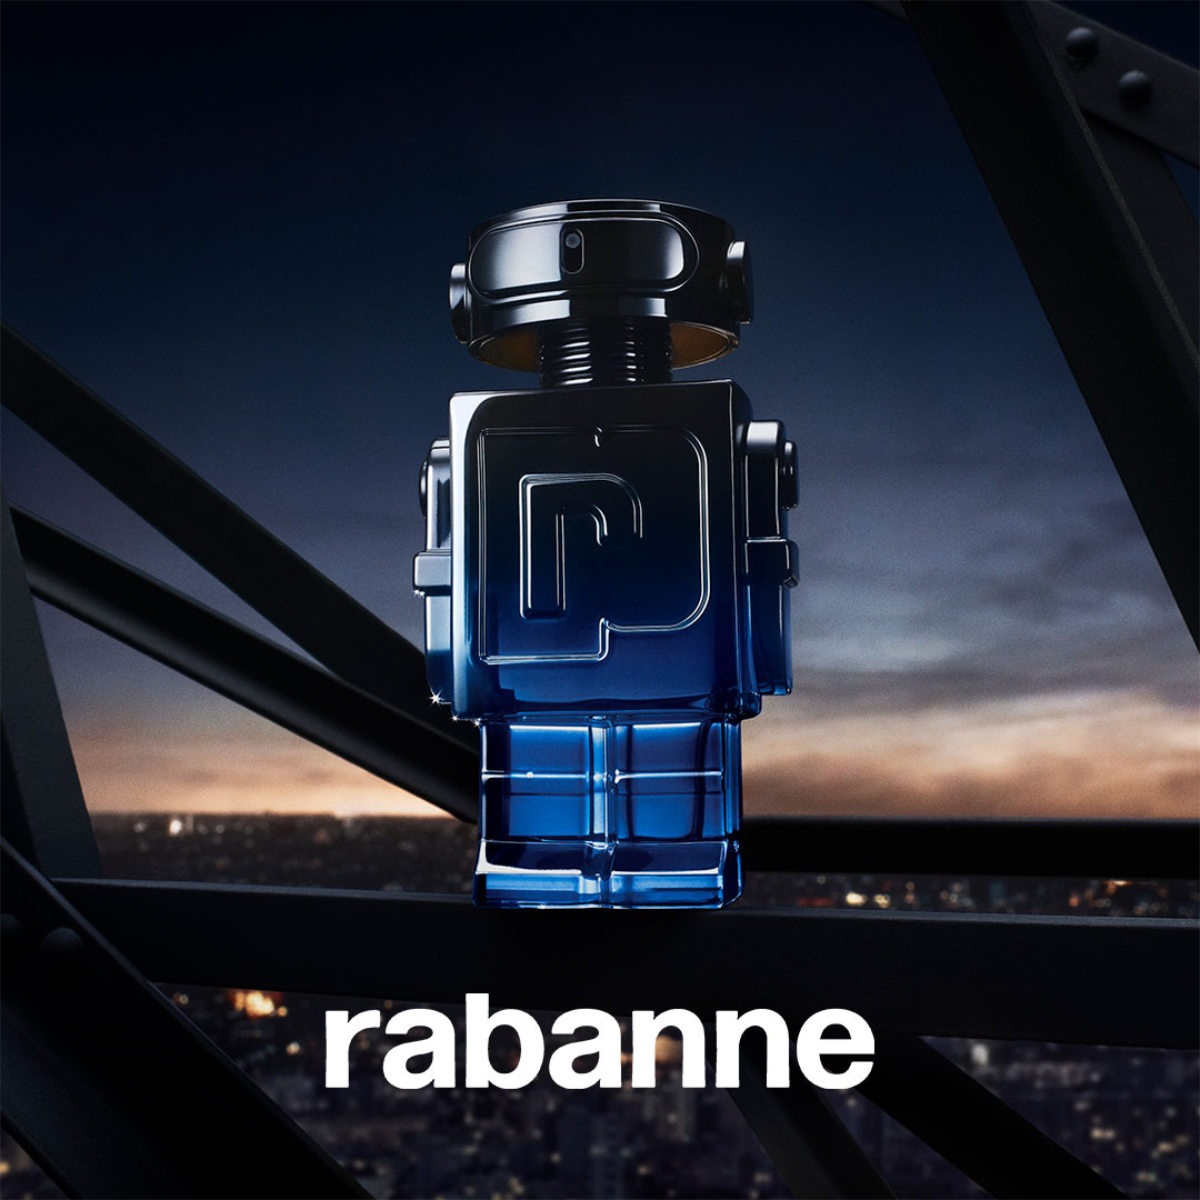 Phantom Intense - The New Fragrance By Rabanne